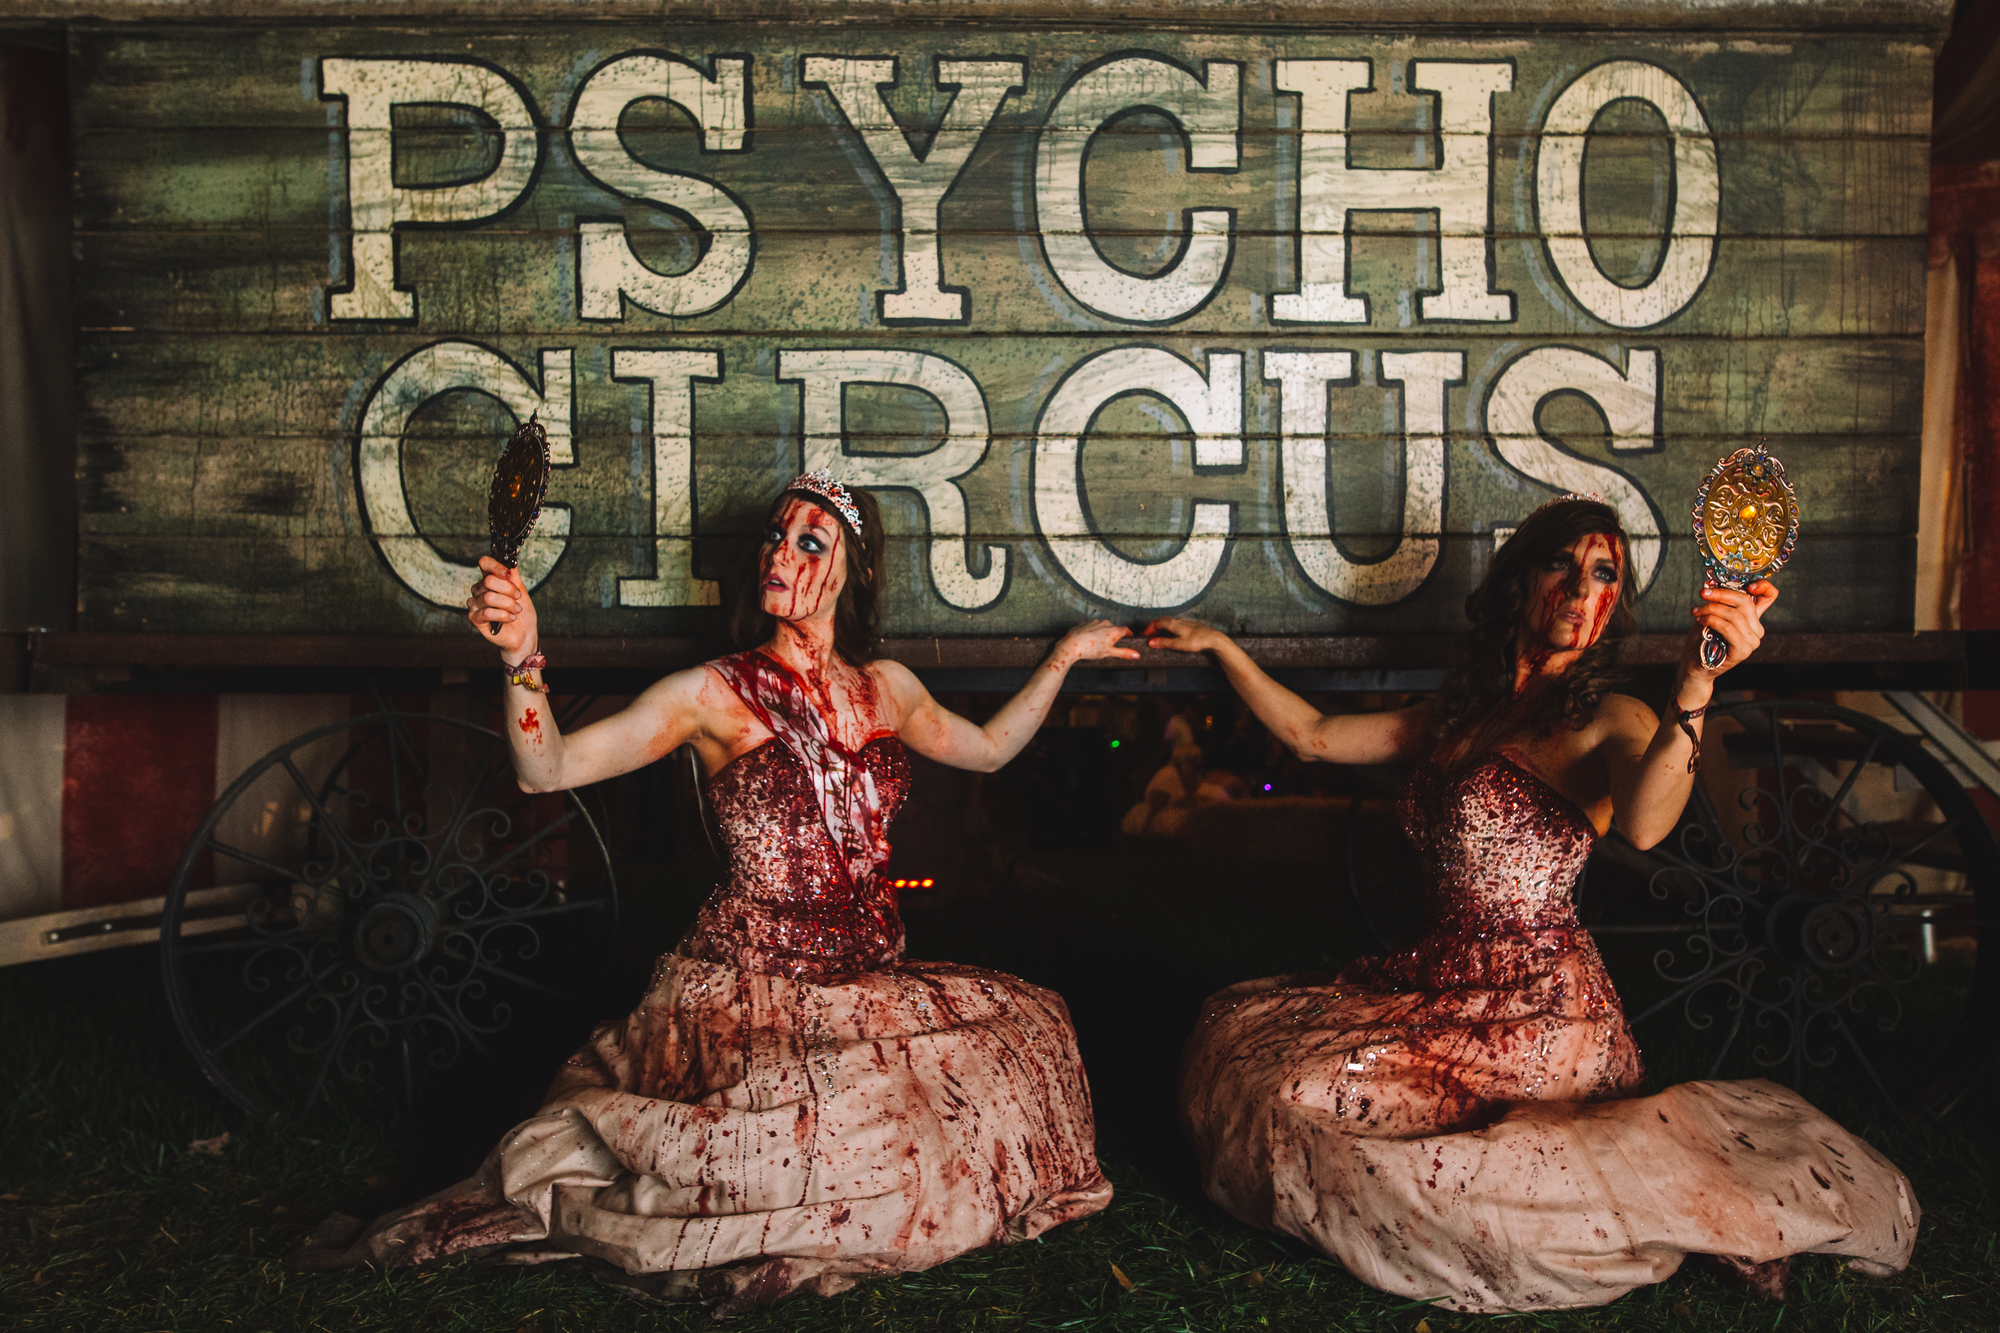 Escape: Psycho Circus 2016